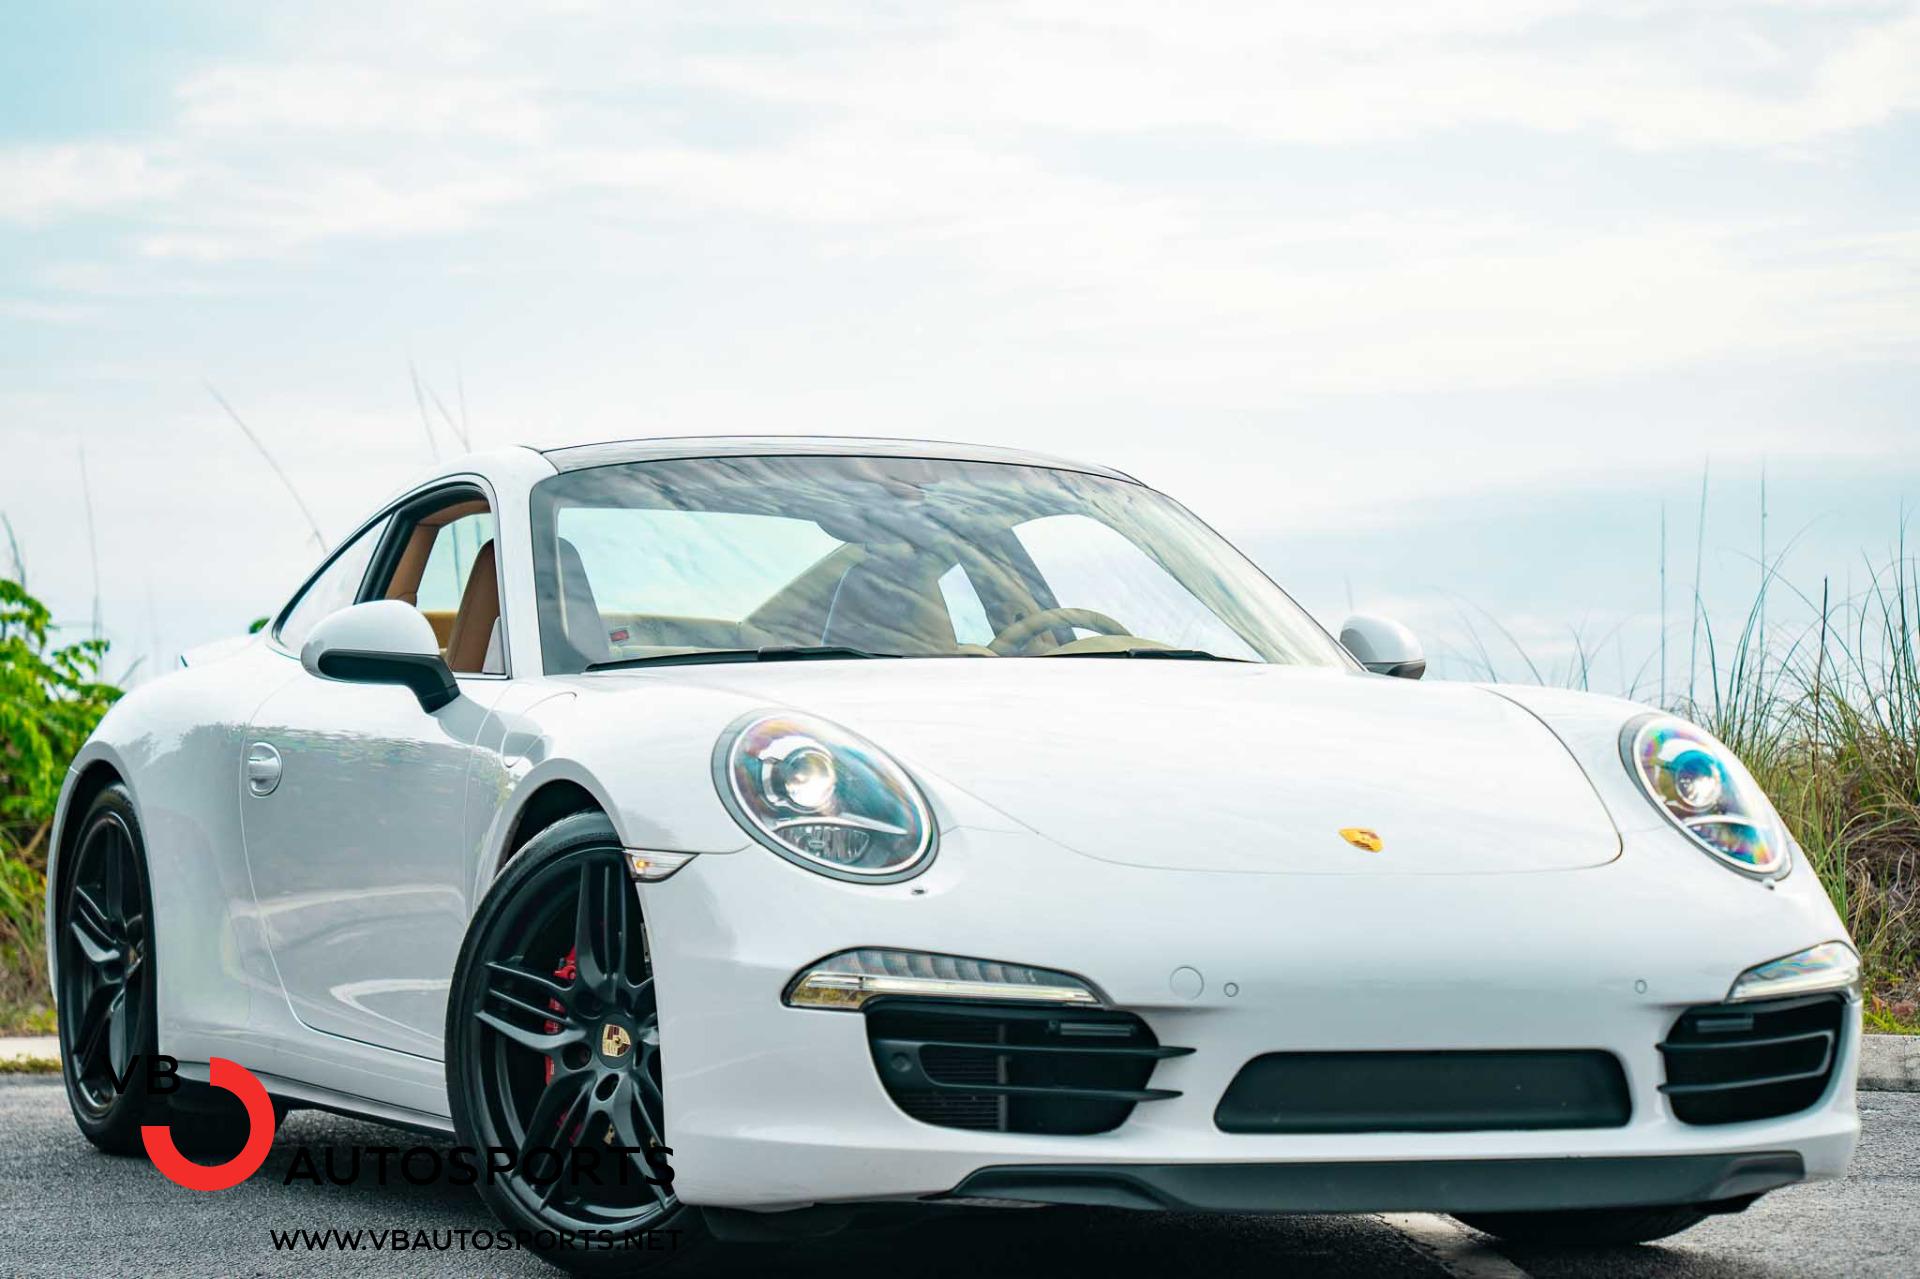 Pre-Owned 2013 Porsche 911 Carrera 4S For Sale ($74,900) | VB Autosports  Stock #VBC208